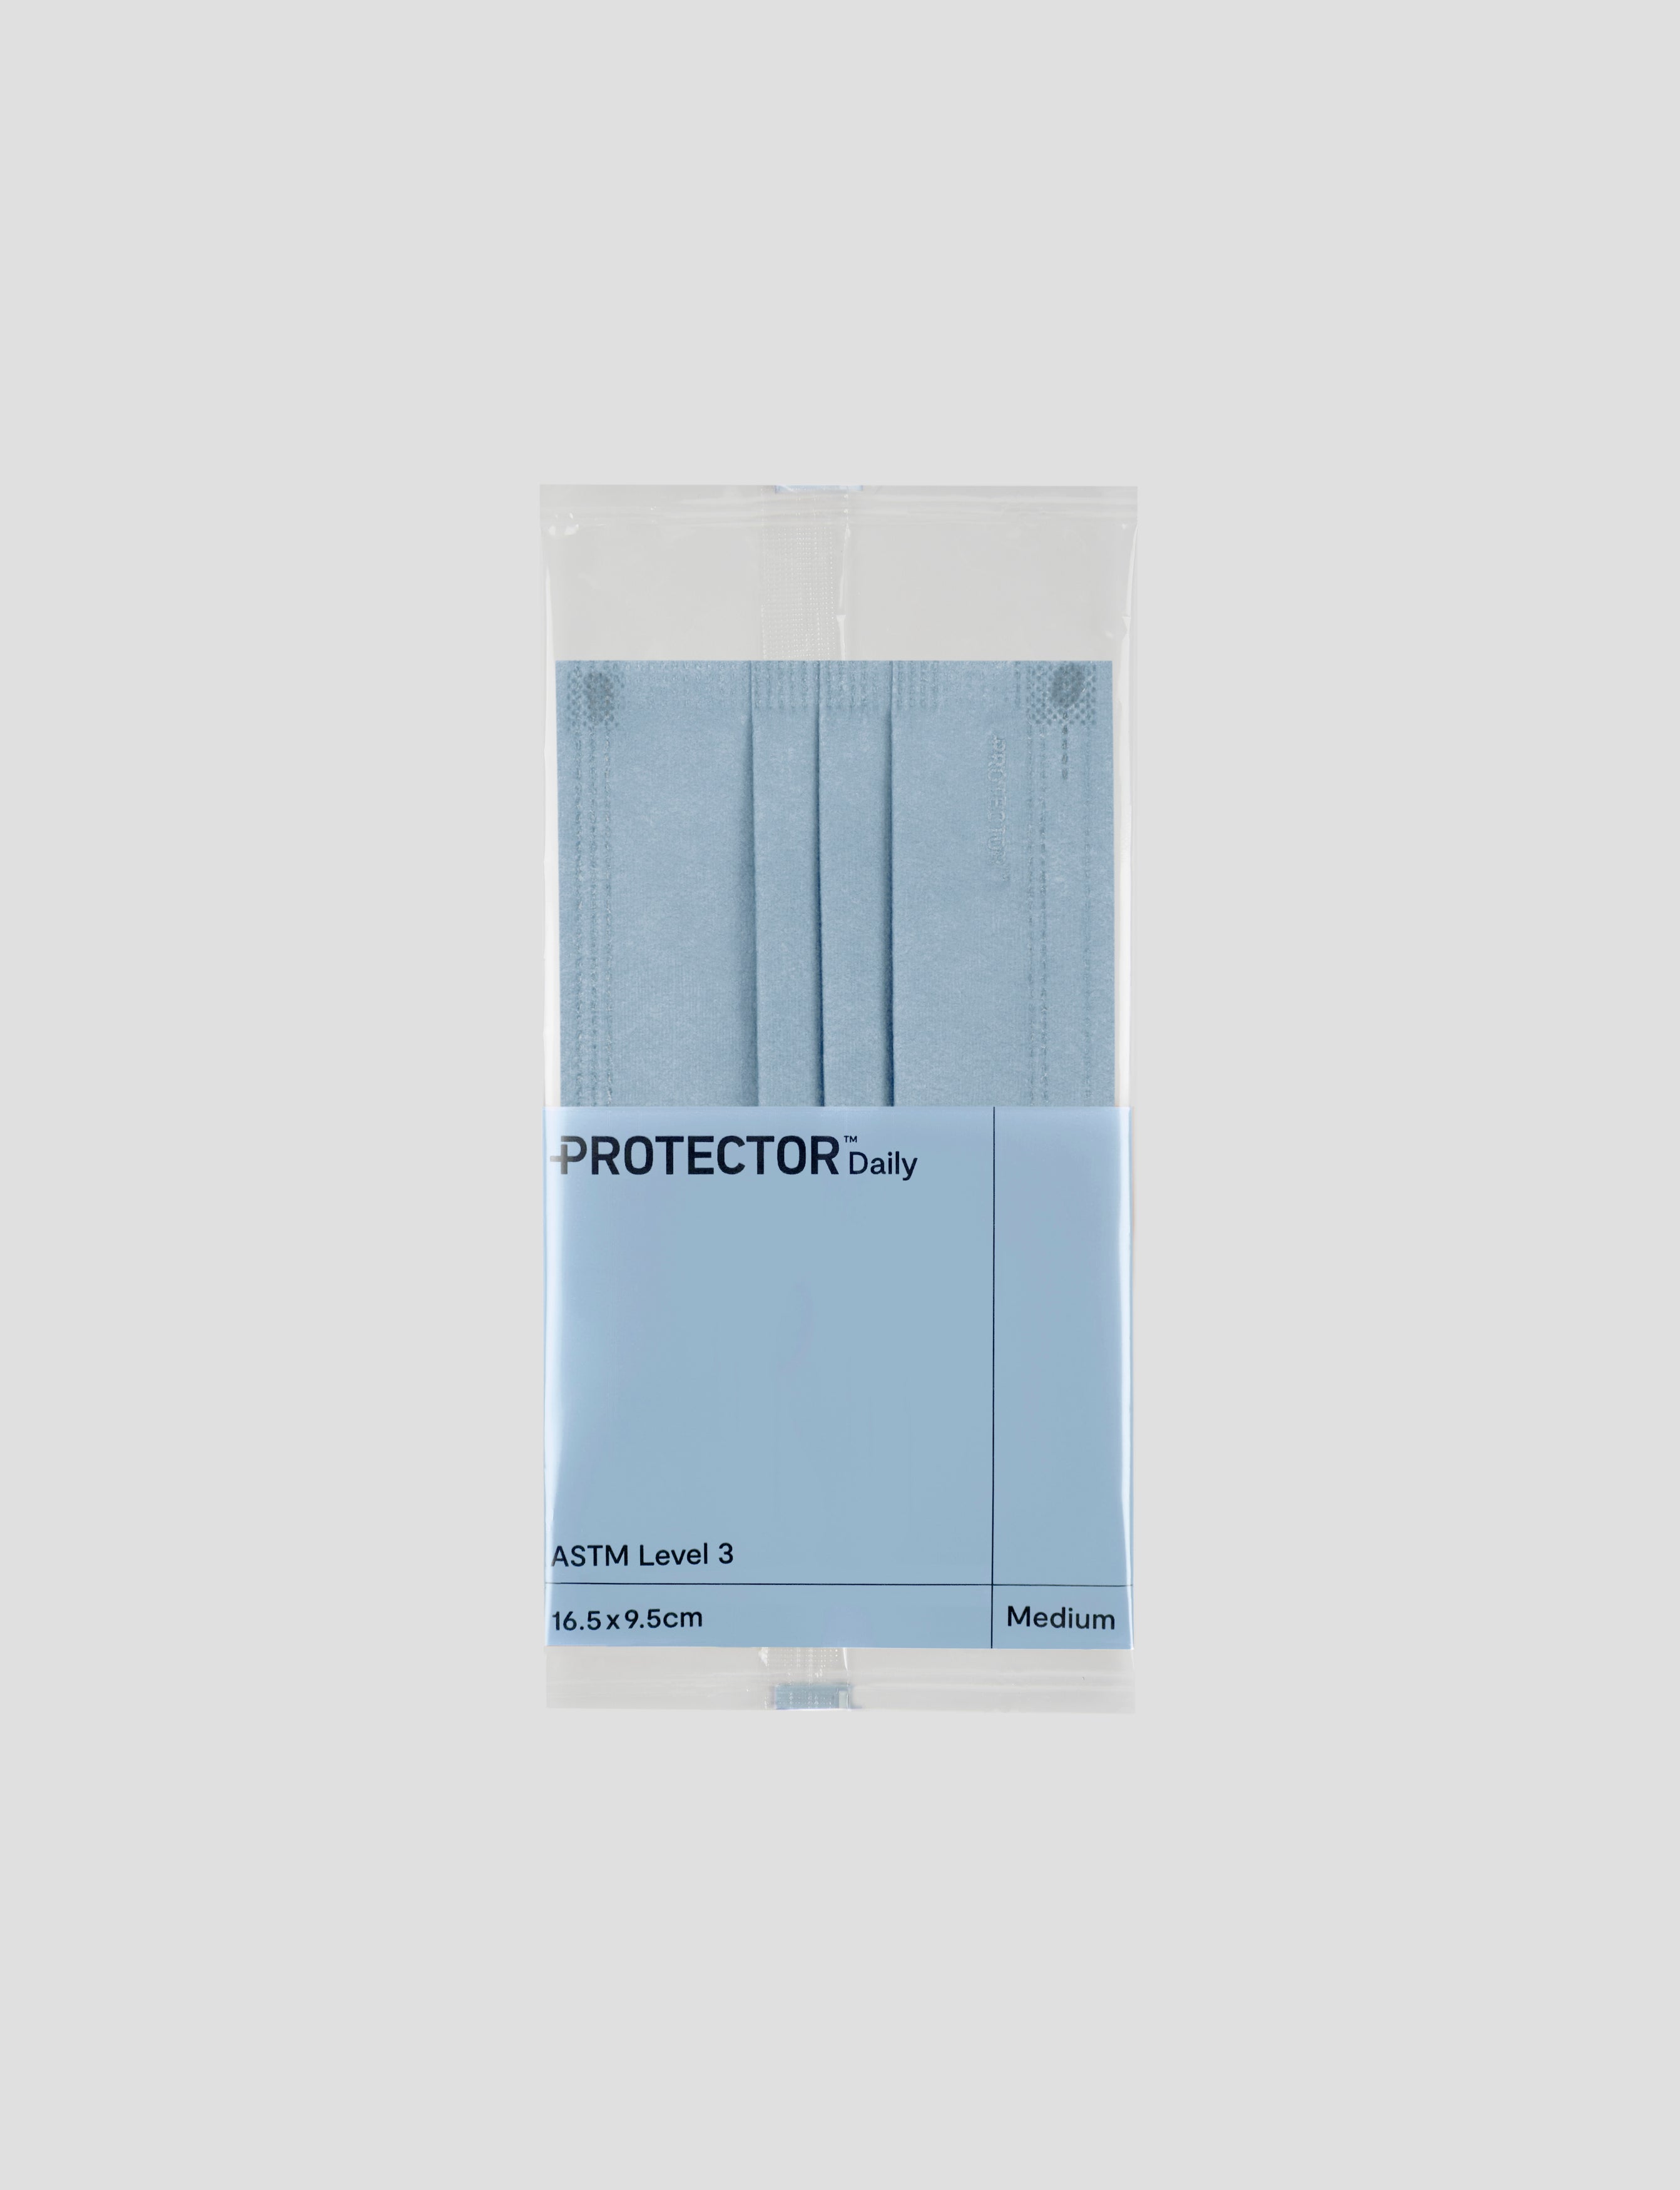 Protector Daily 口罩， 淚水藍